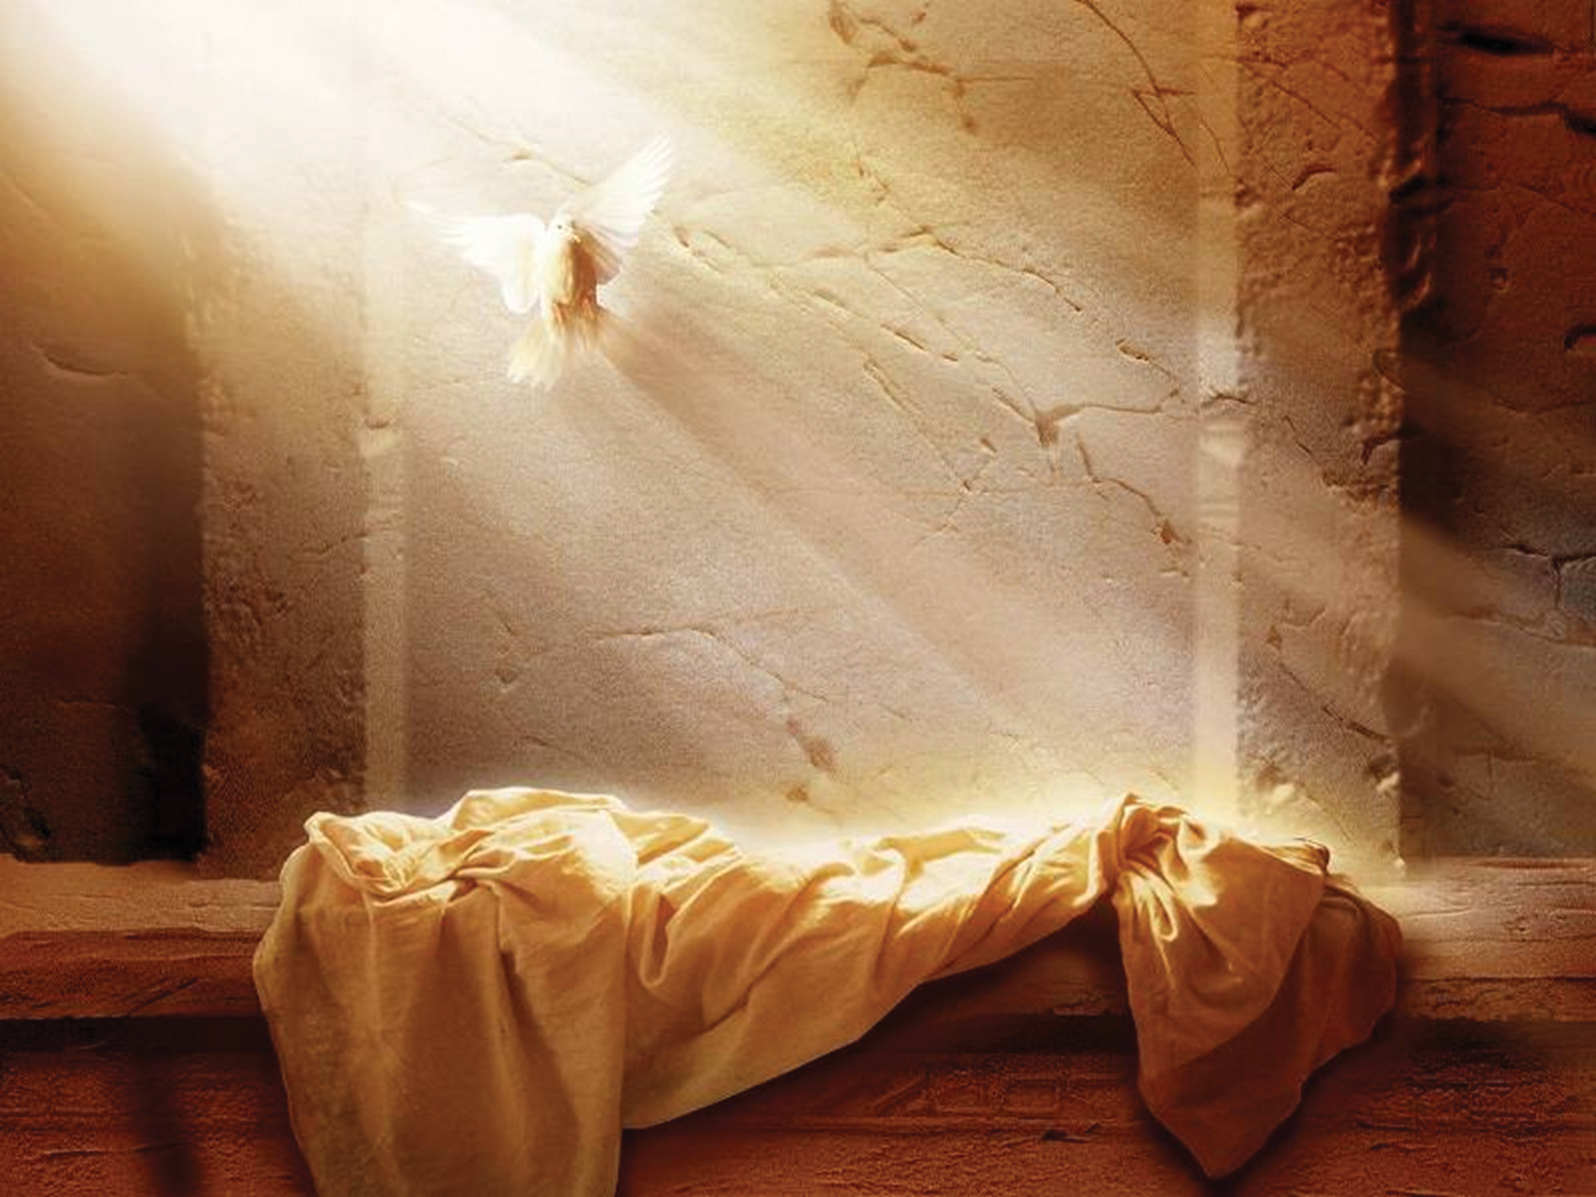 Does Jesus' Resurrection really matter? - The Bishop's Bulletin